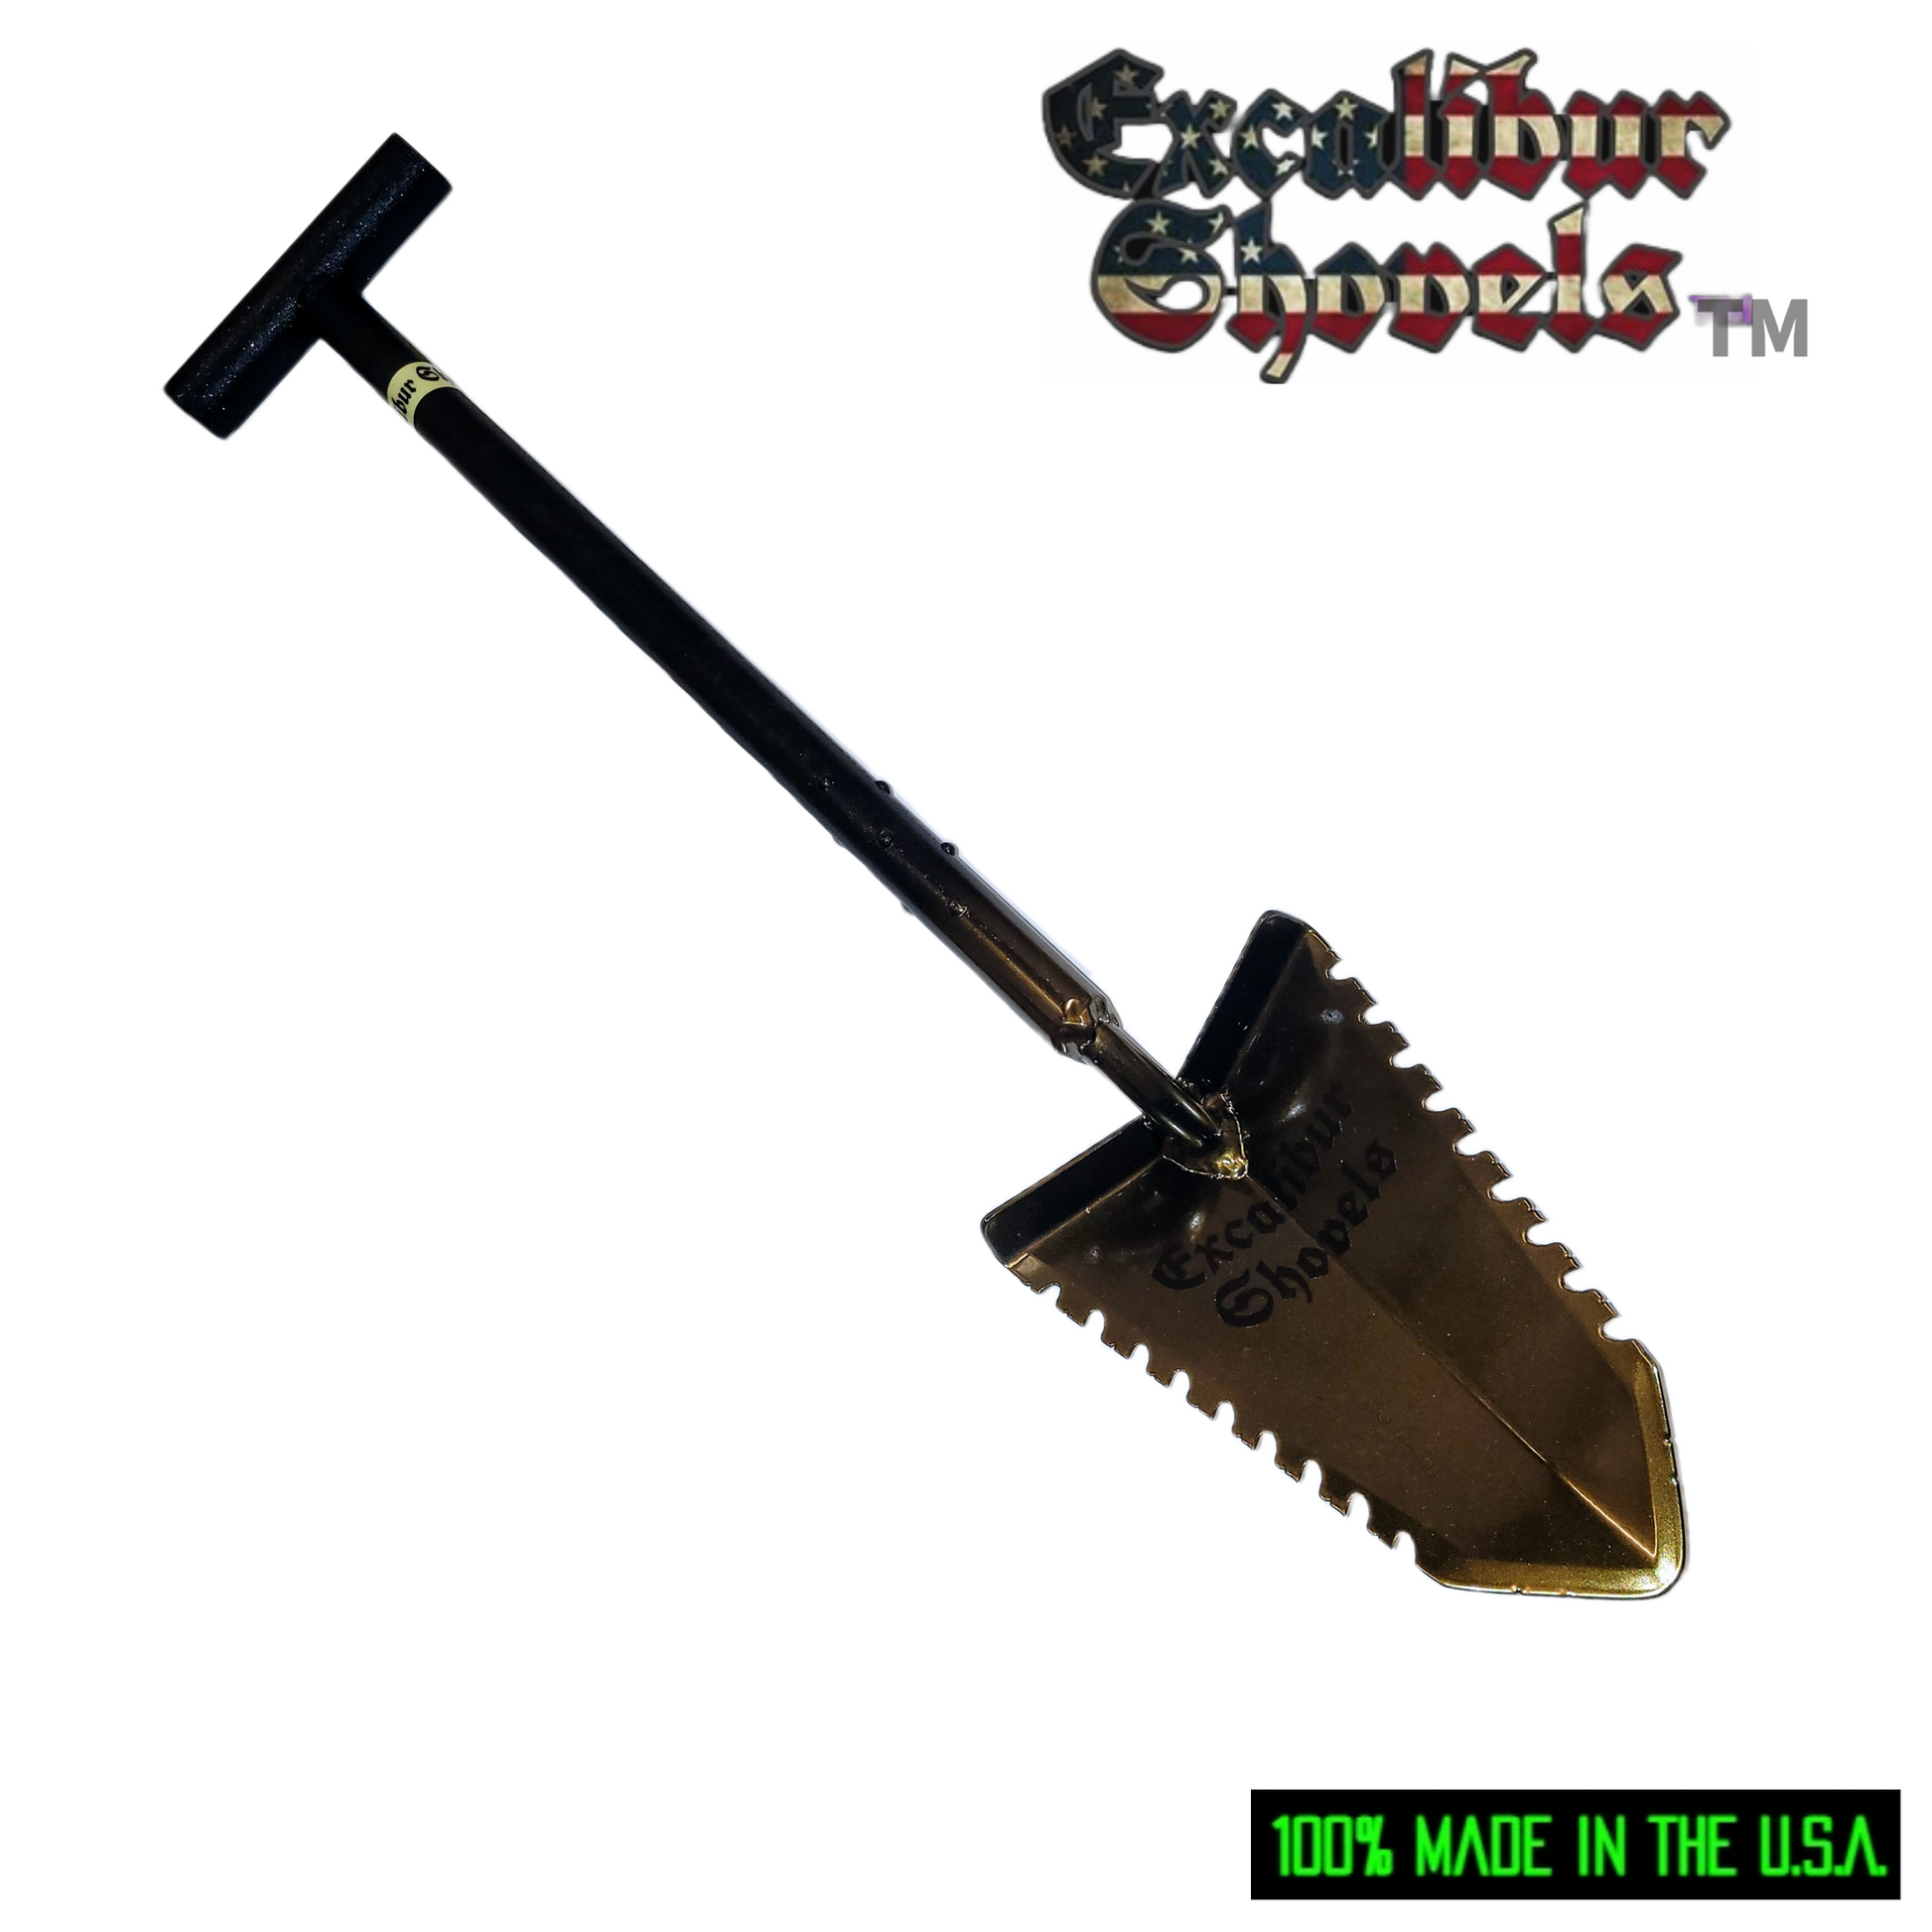 Excalibur 31" wide blade shovel  with logo